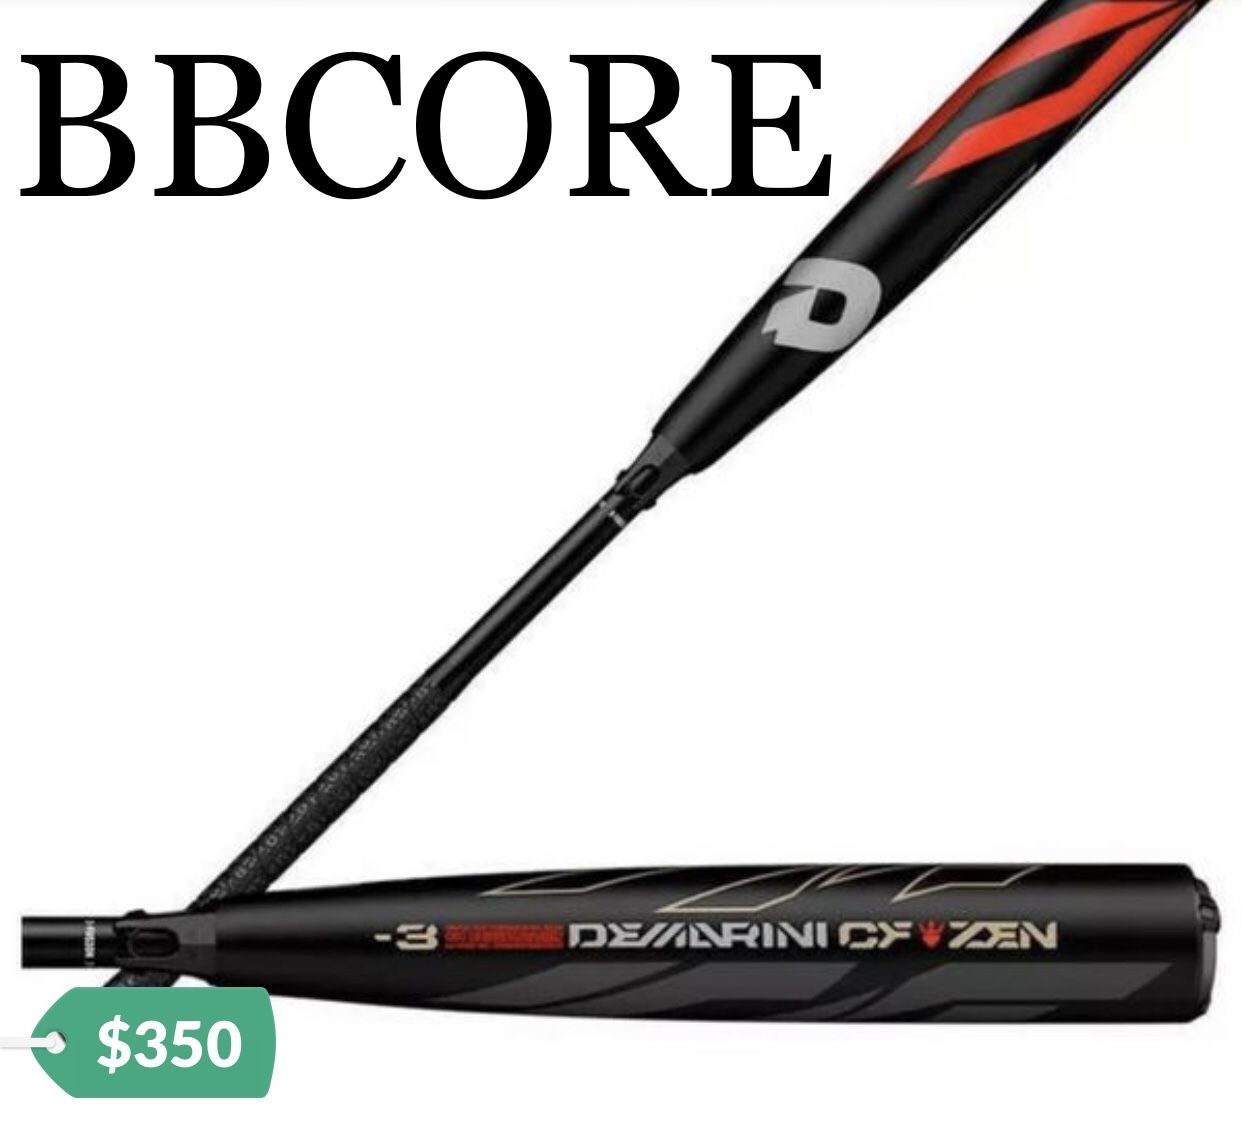 2019 DeMarini CF Zen -3 BBCOR Baseball Bat Balanced WTDXCBC-19 32"/29 oz -3